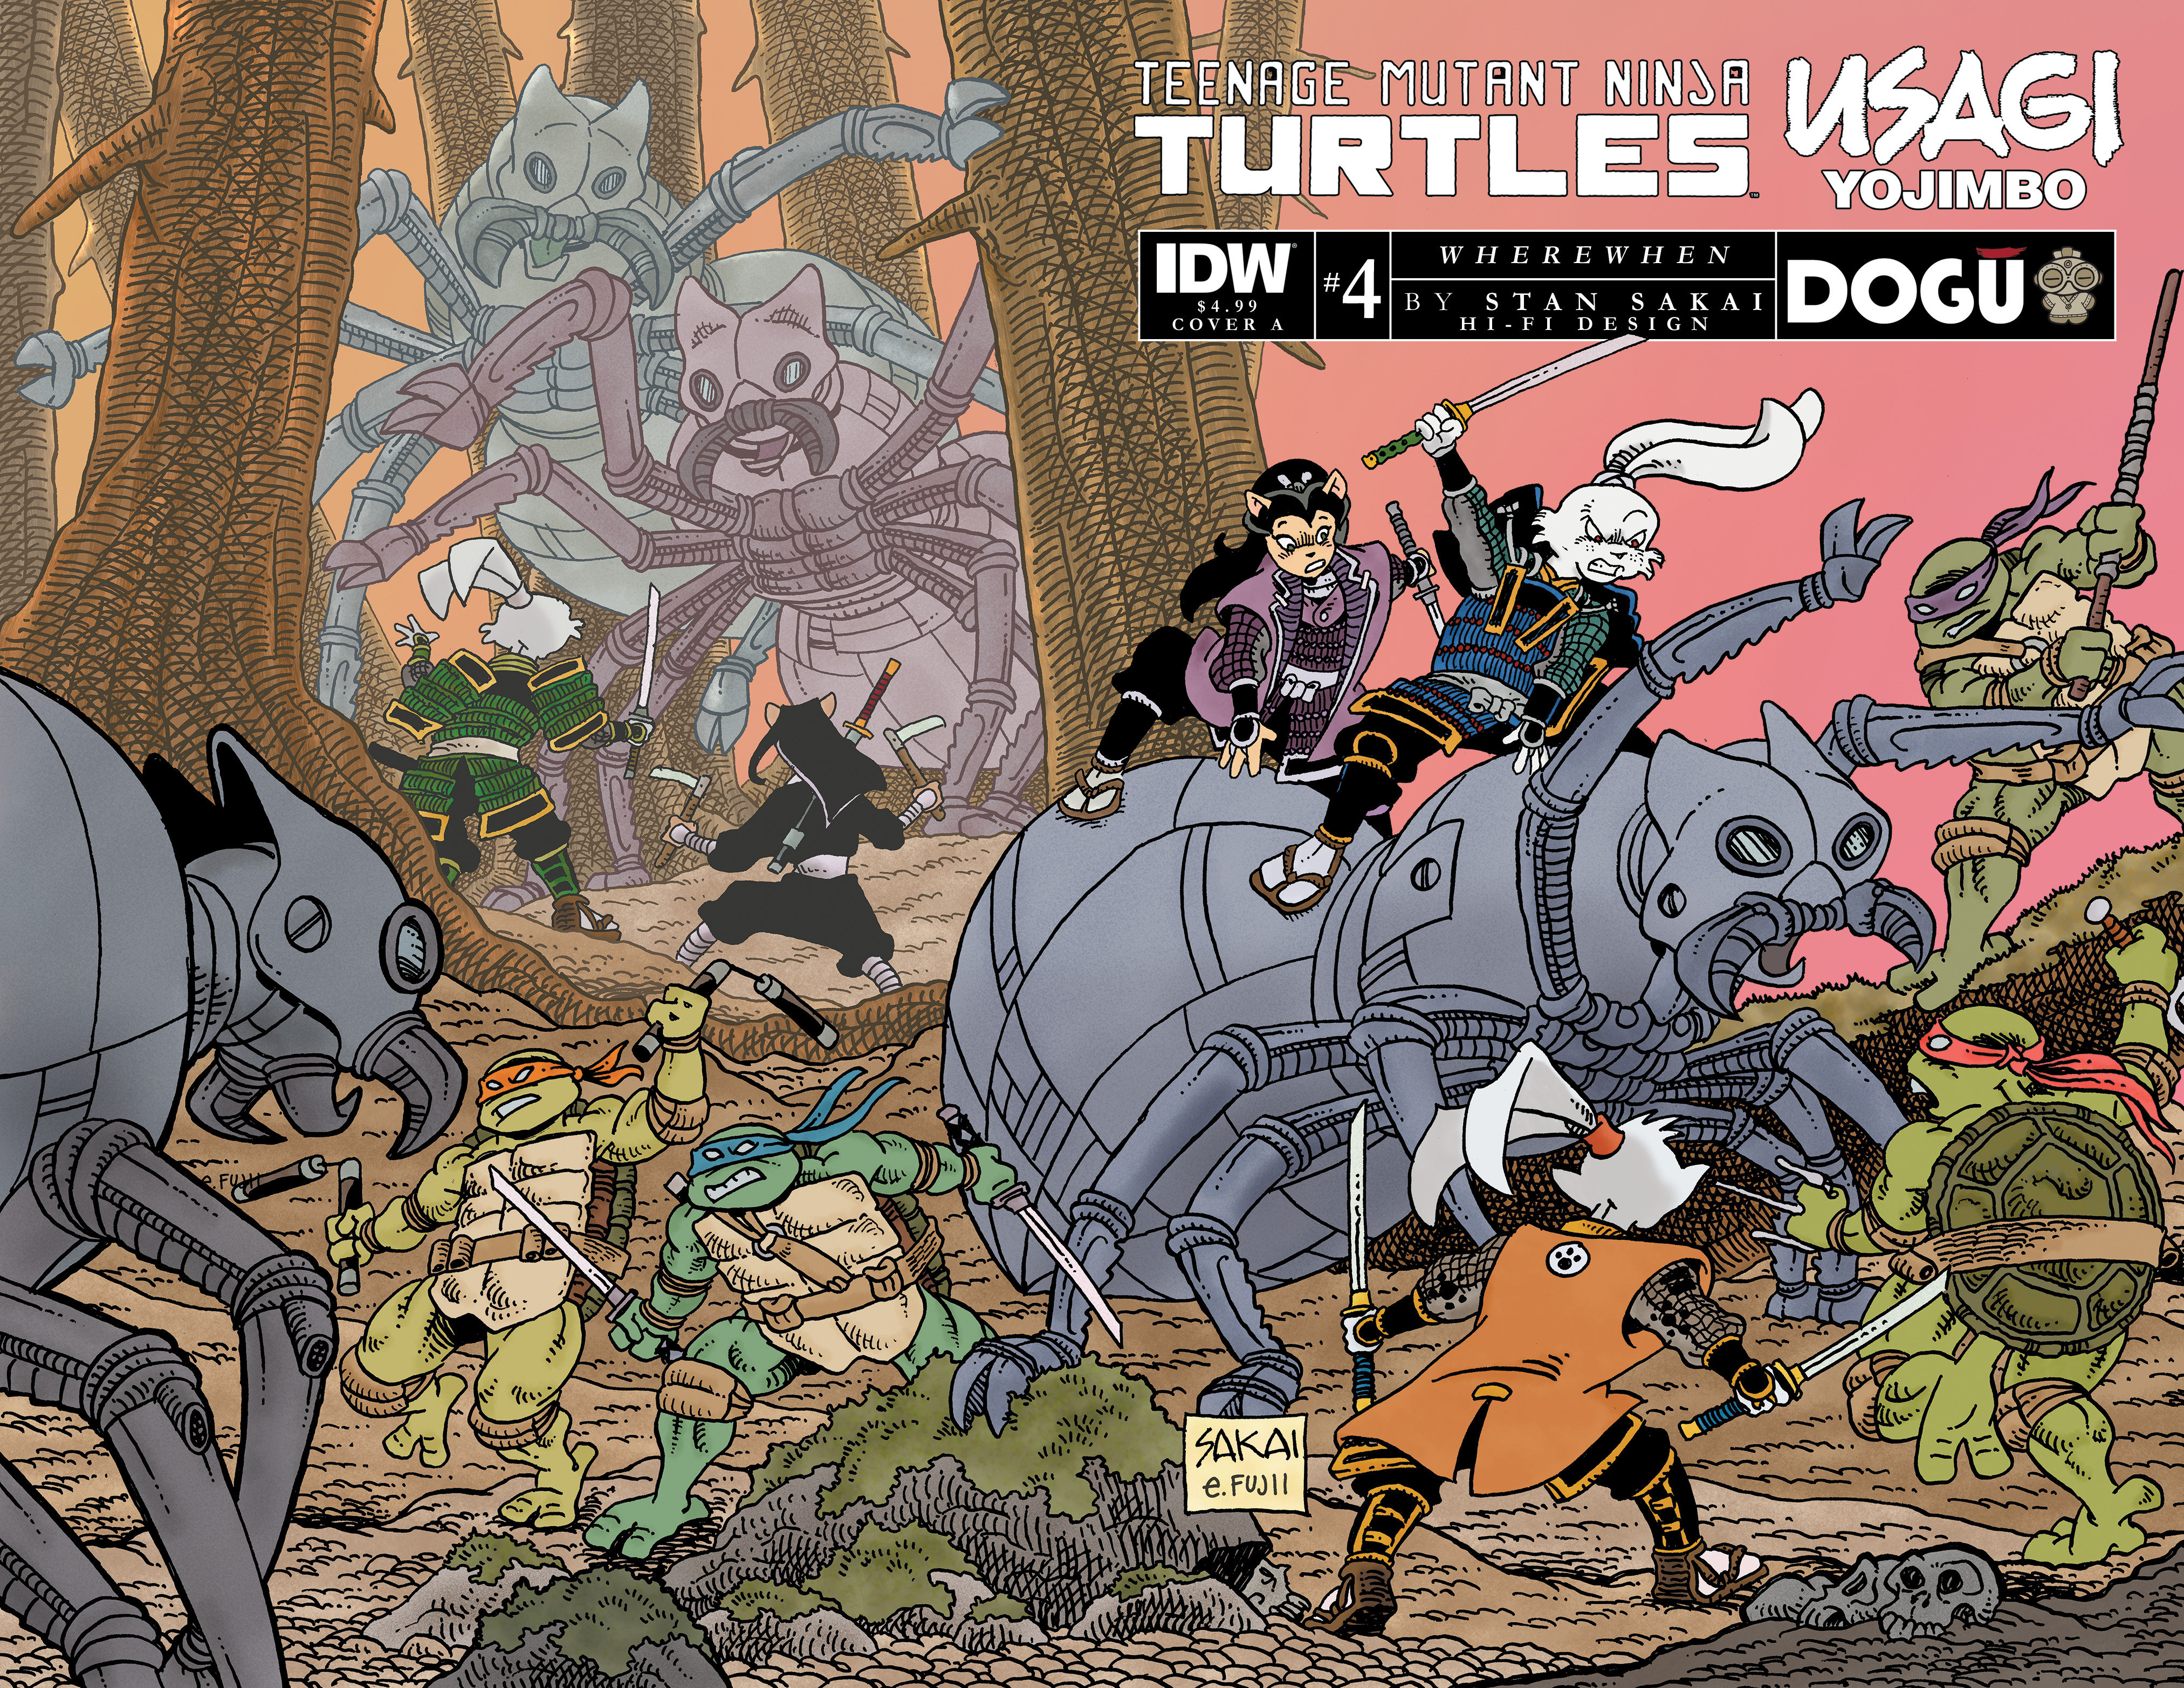 Teenage Mutant Ninja Turtles/Usagi Yojimbo WhereWhen #4 Cover A Sakai